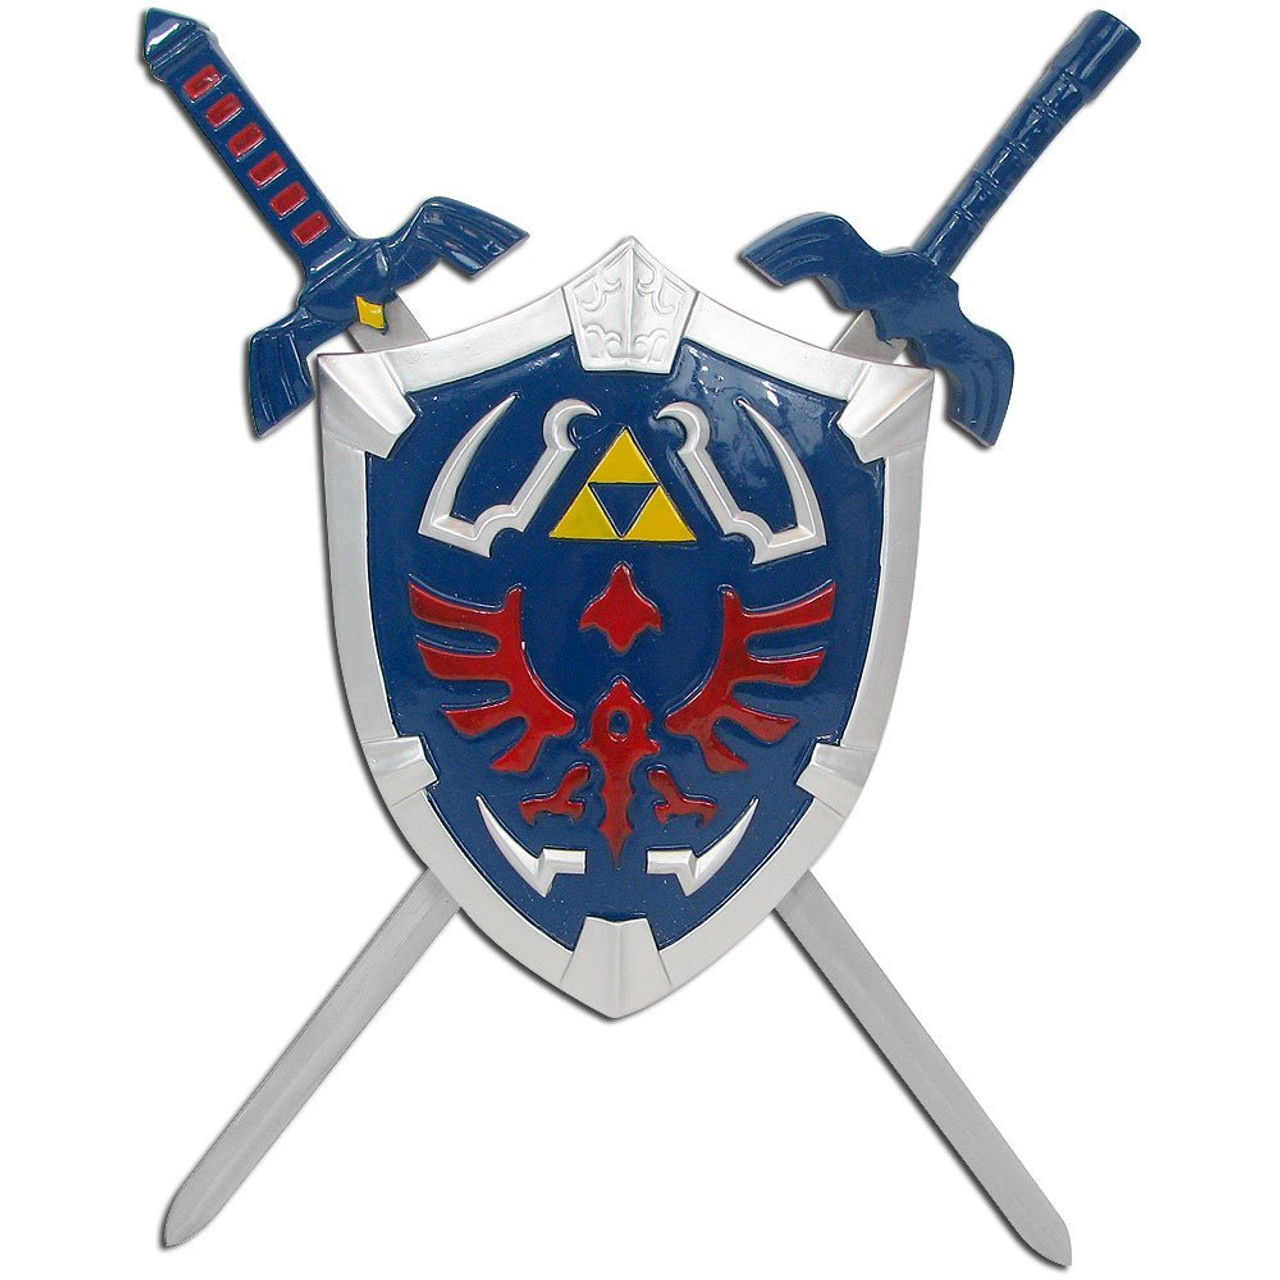 hylian shield and master sword